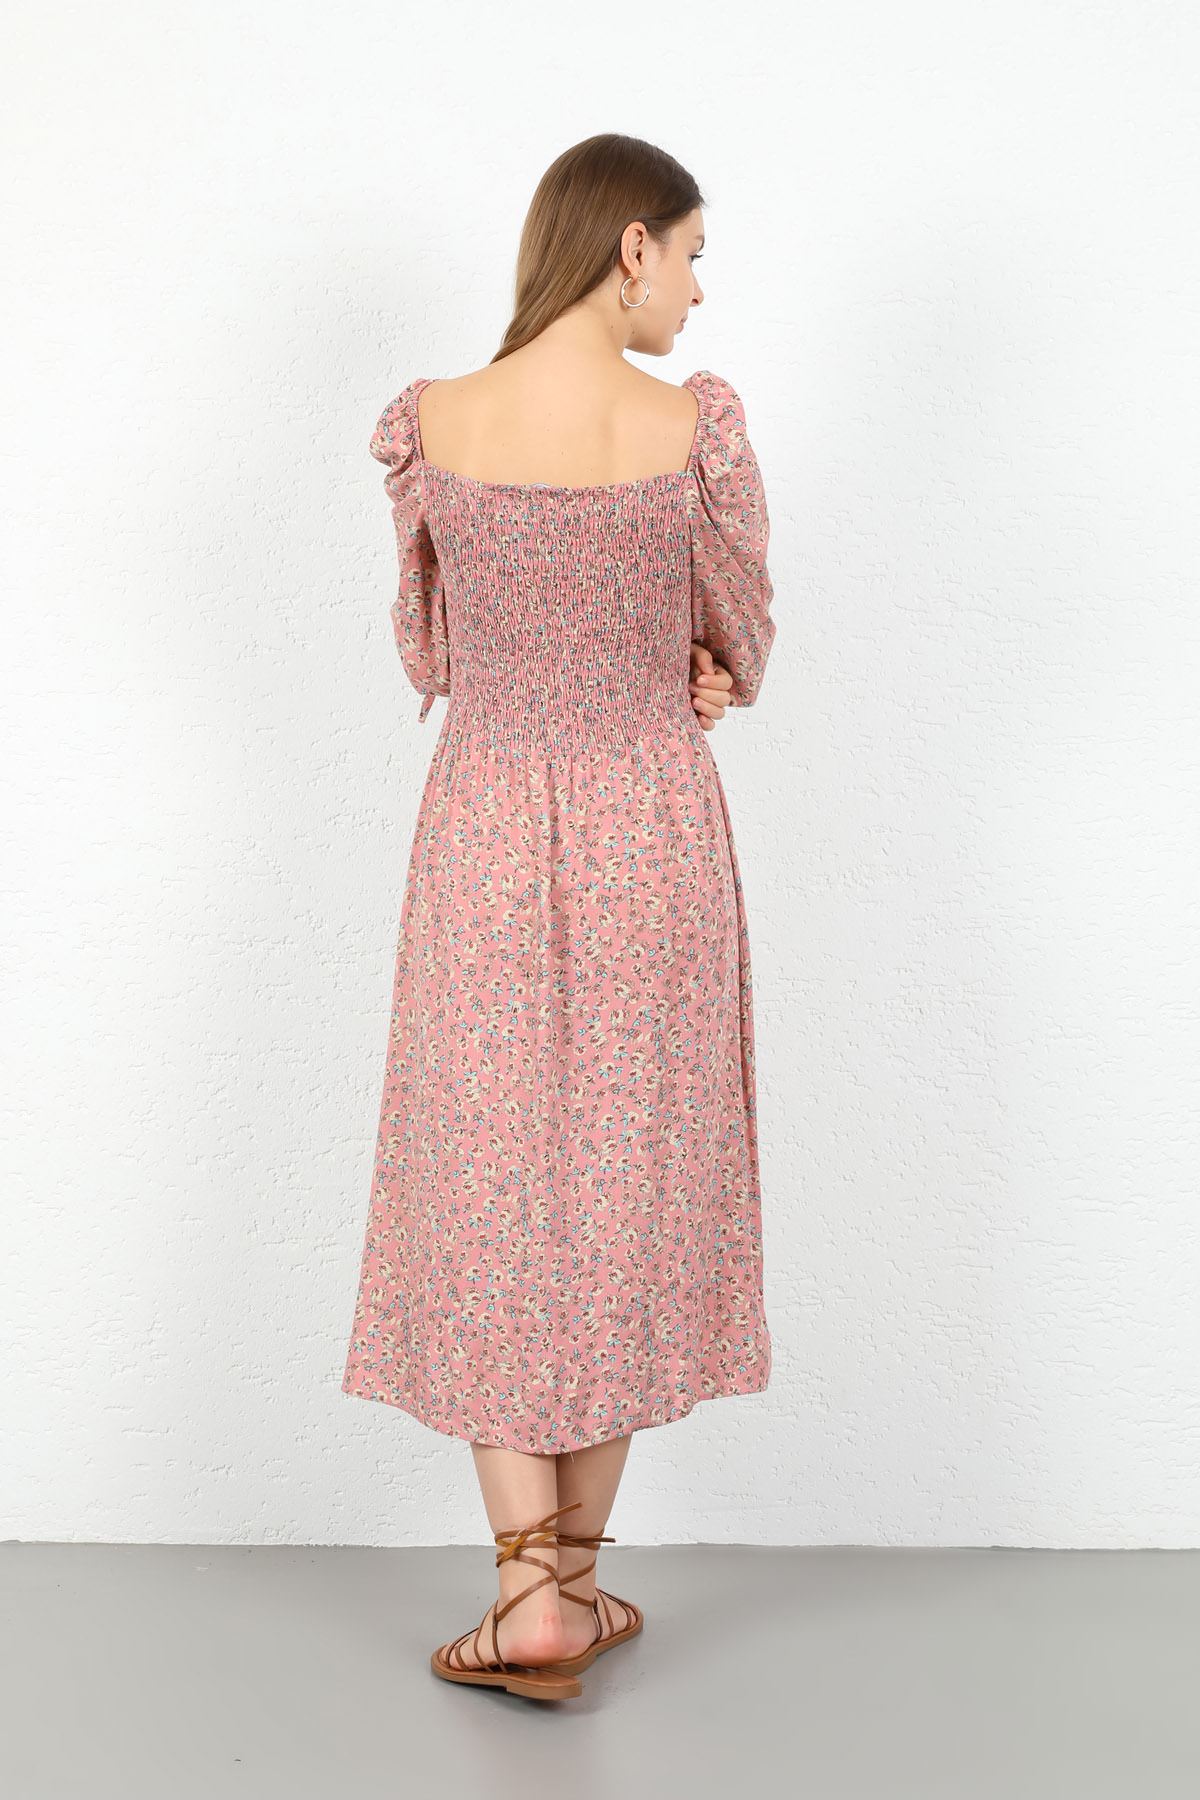 Square Neckline Tight Fit Floral Print Women Dress - Light Pink